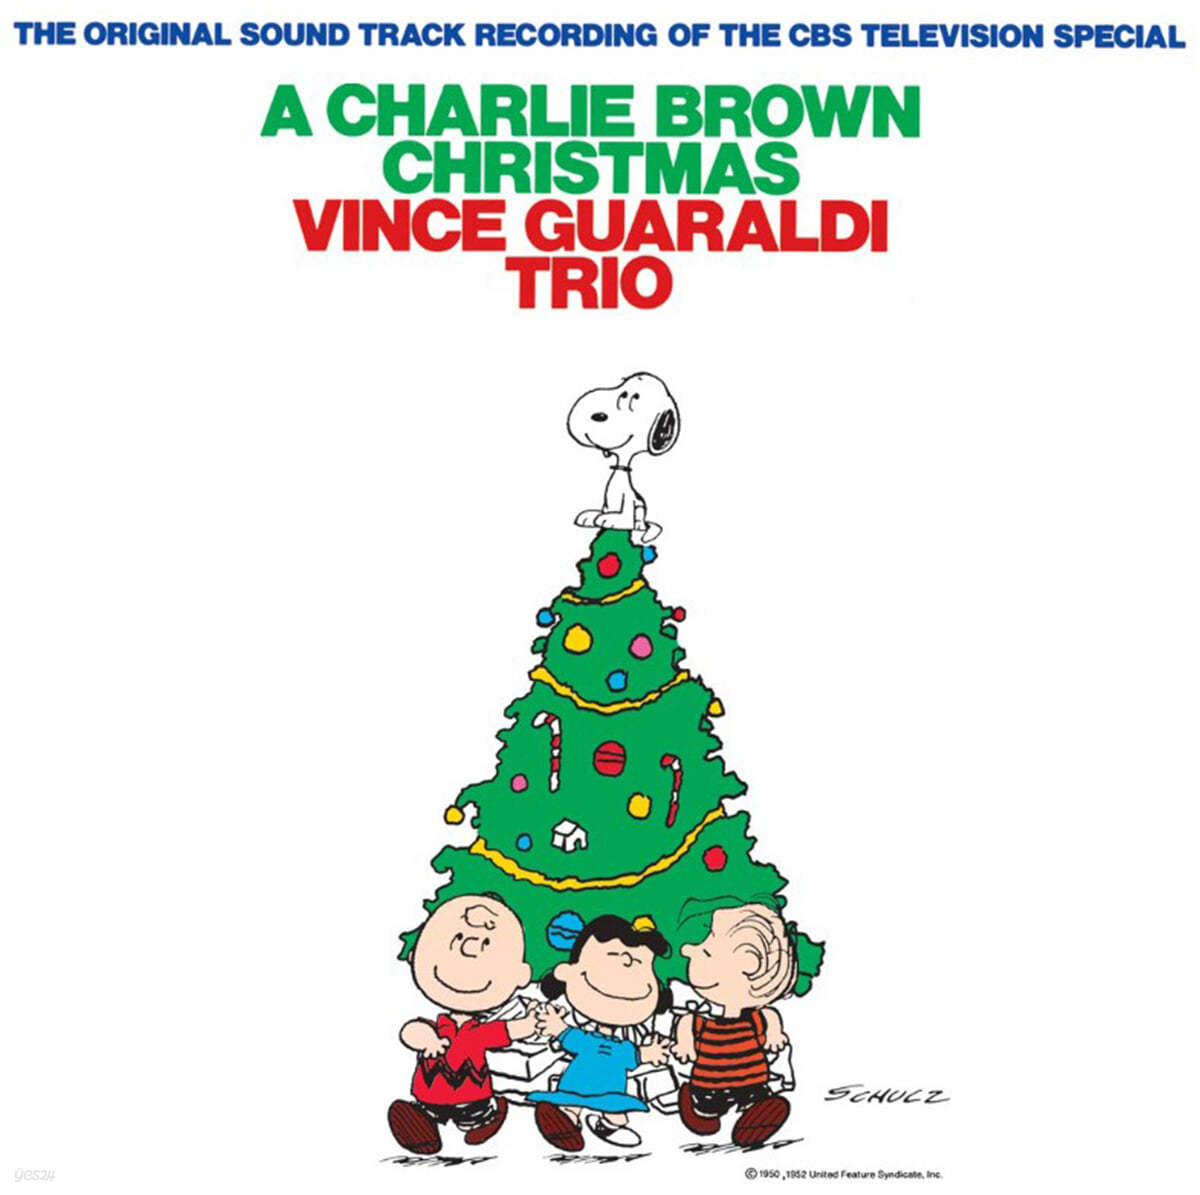 Vince Guaraldi Trio (빈스 과랄디 트리오) - A Charlie Brown Christmas 